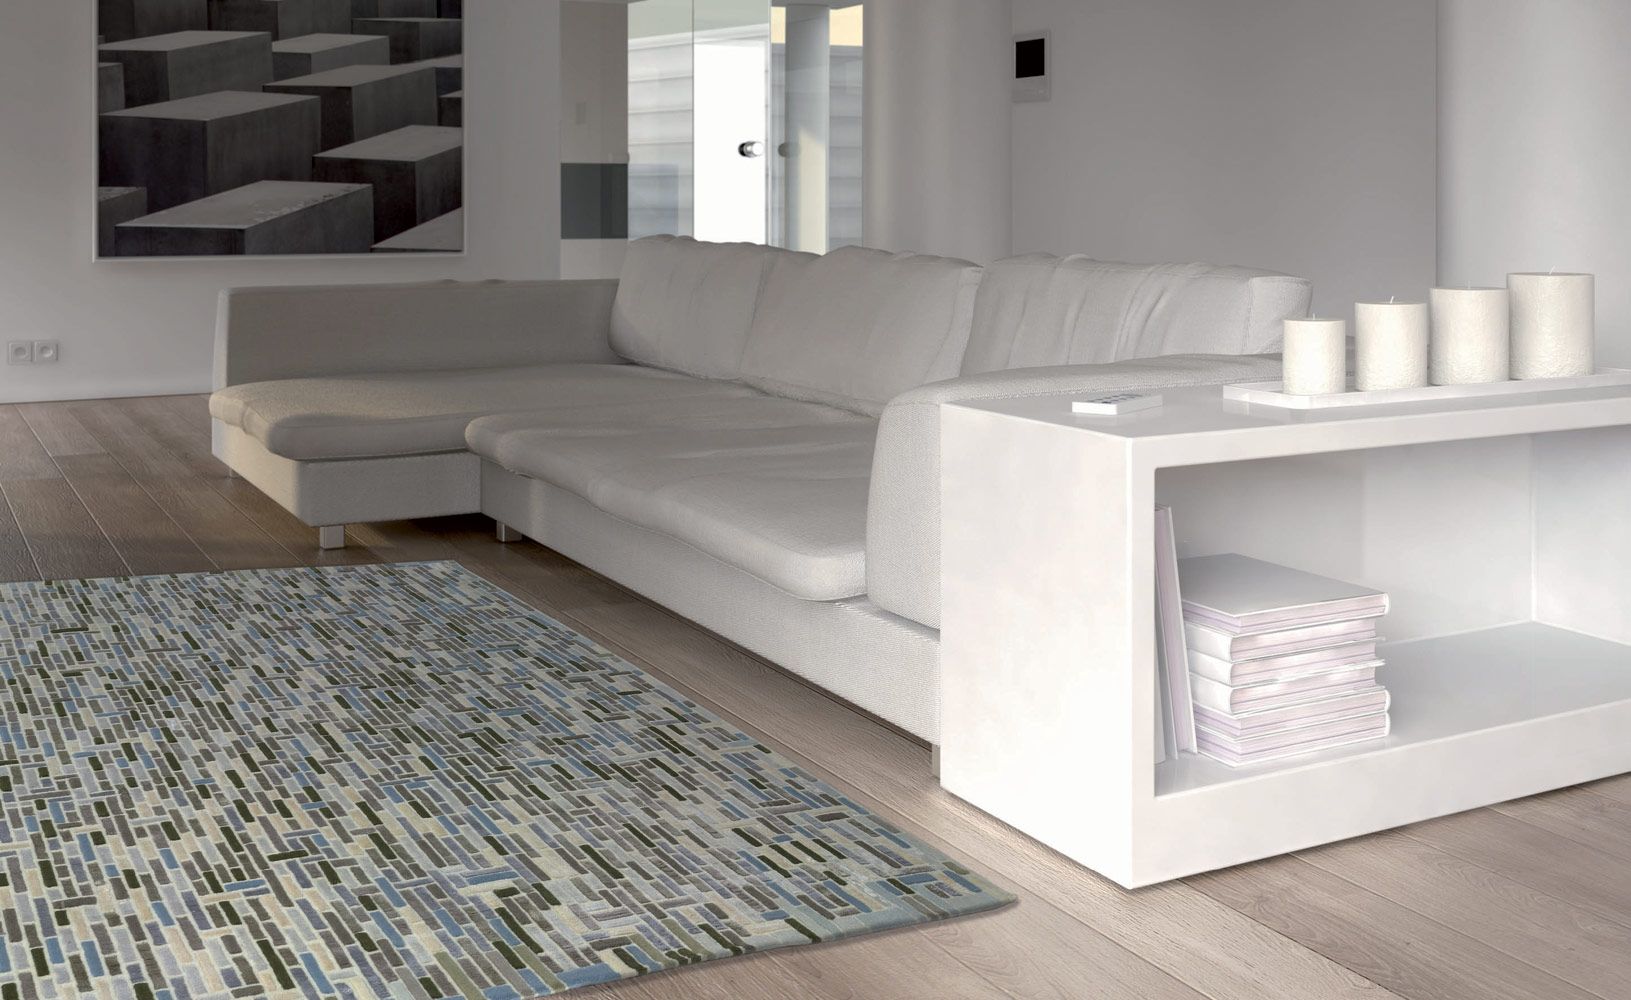 Sofa on Laminate floor | Budget Flooring, Inc.